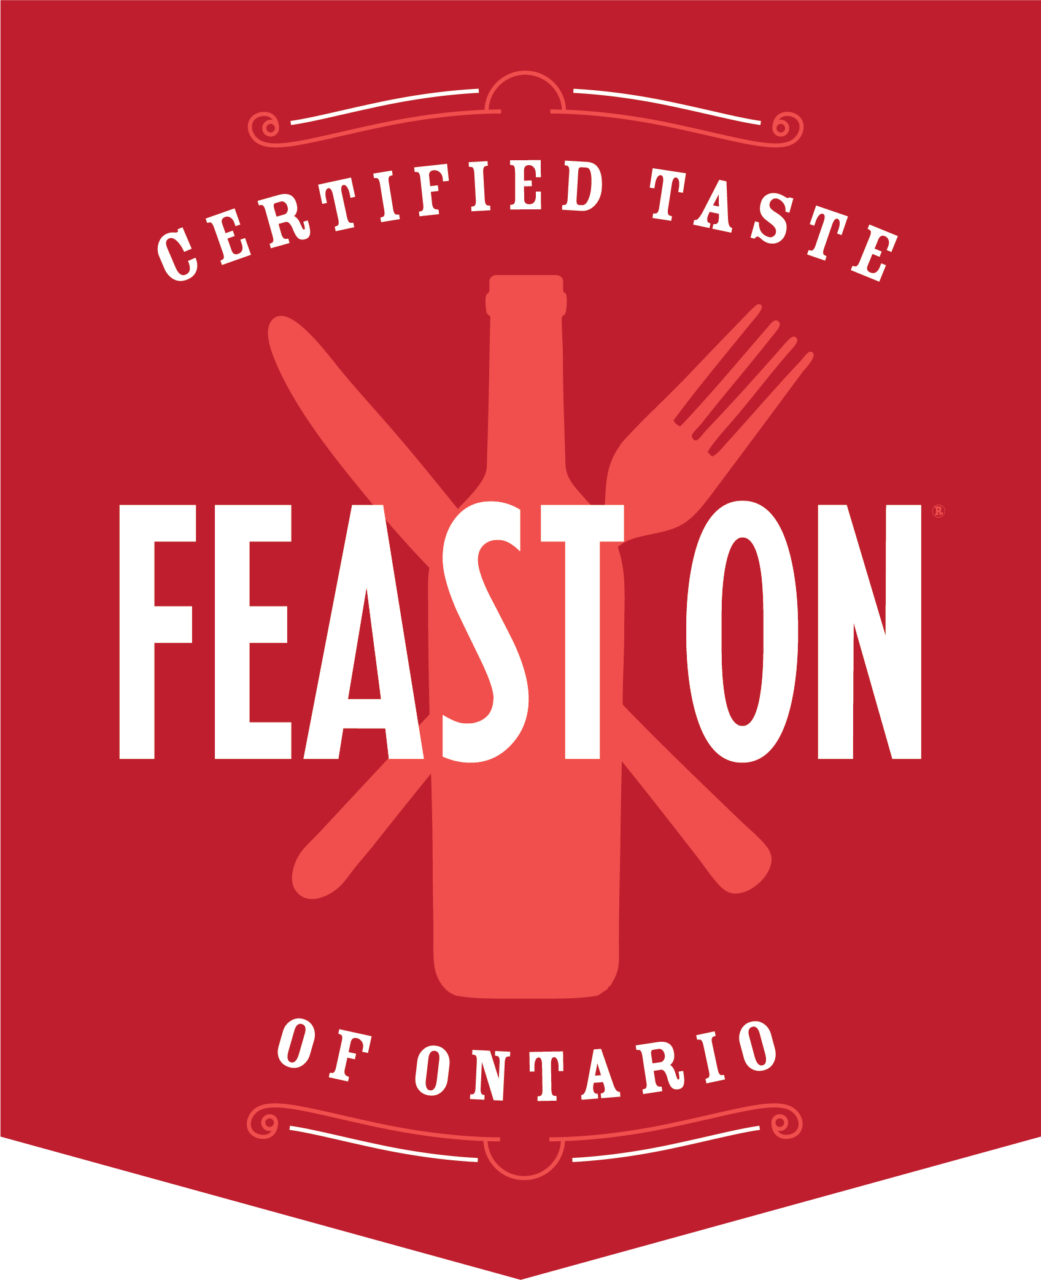 Red logo for FeastON - Certified Taste of Ontario